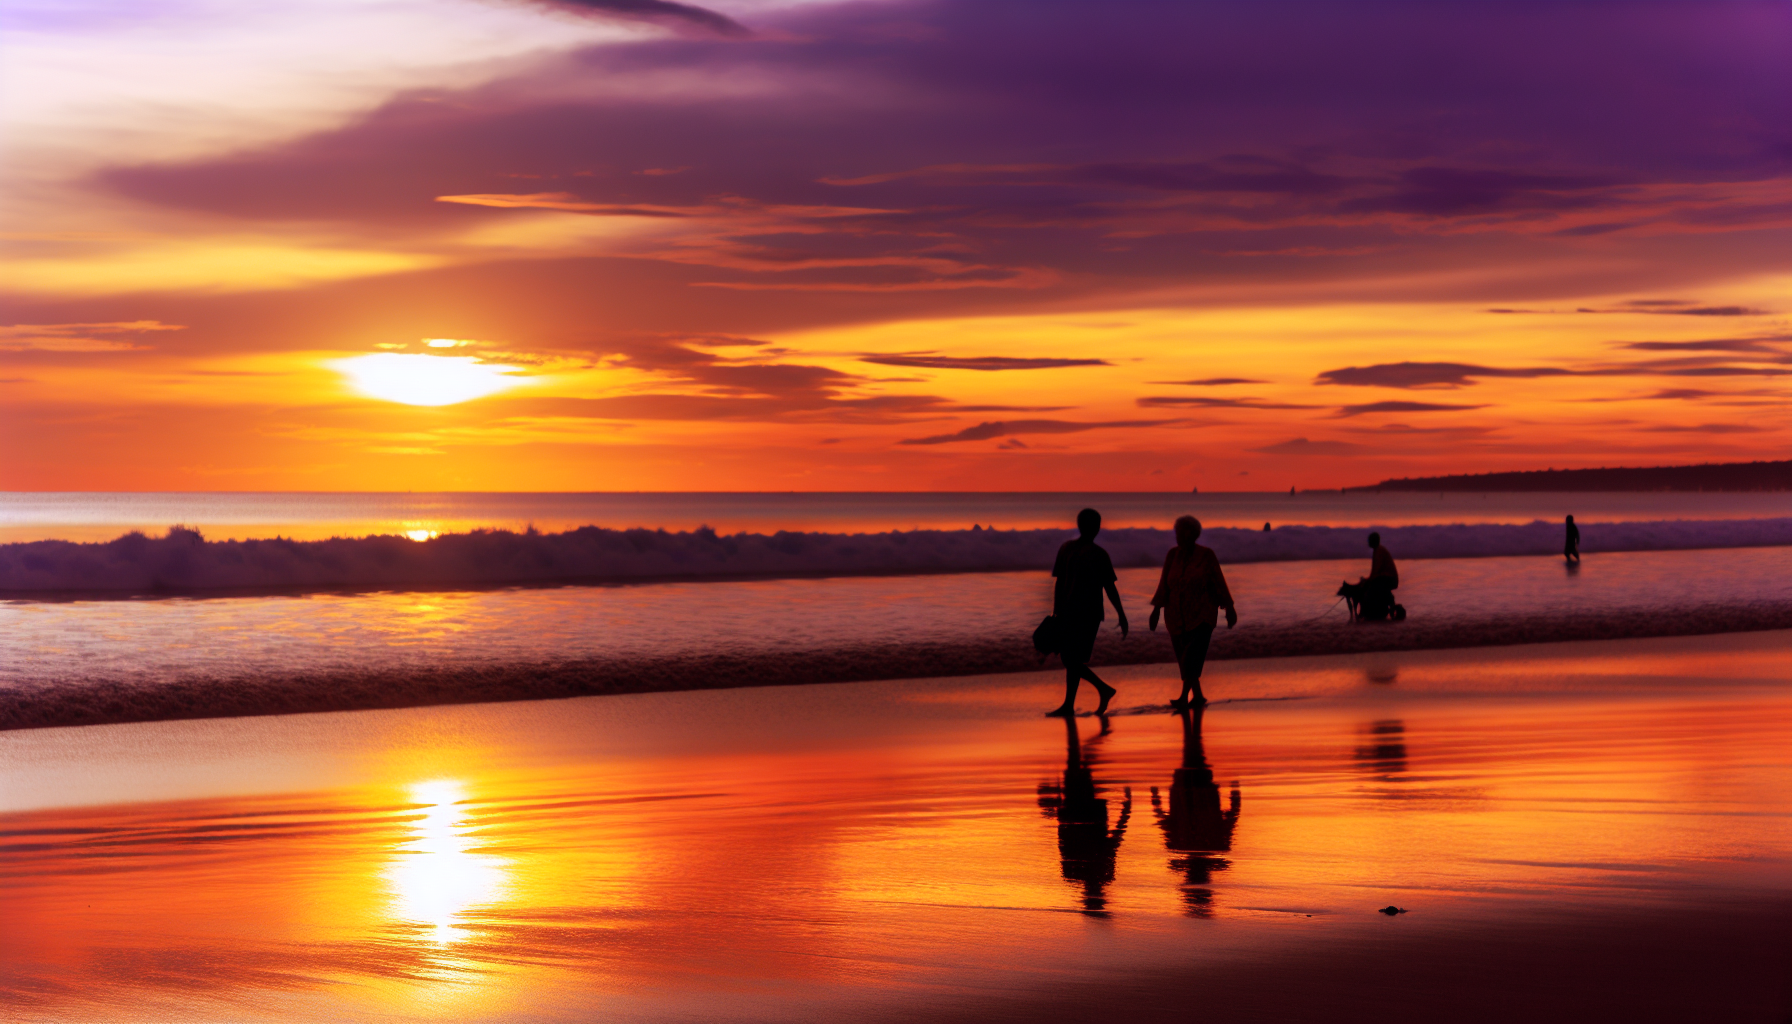 Sunset at Dreamland beach